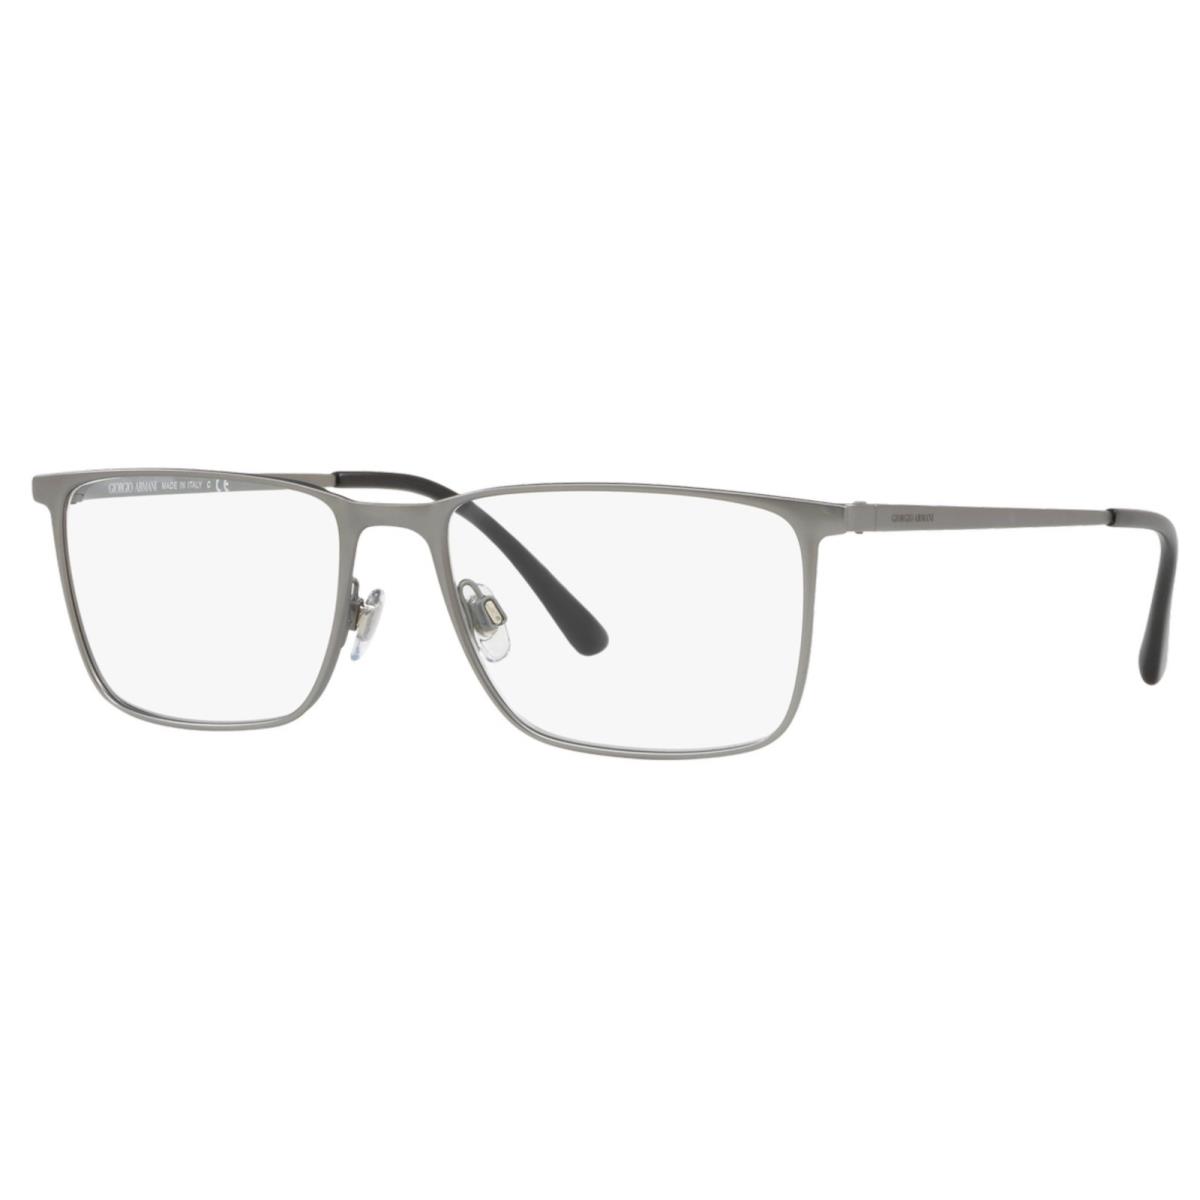 Giorgio Armani Eyeglasses AR 5080 3003 55-17 Matte Silver Rectangular Frames